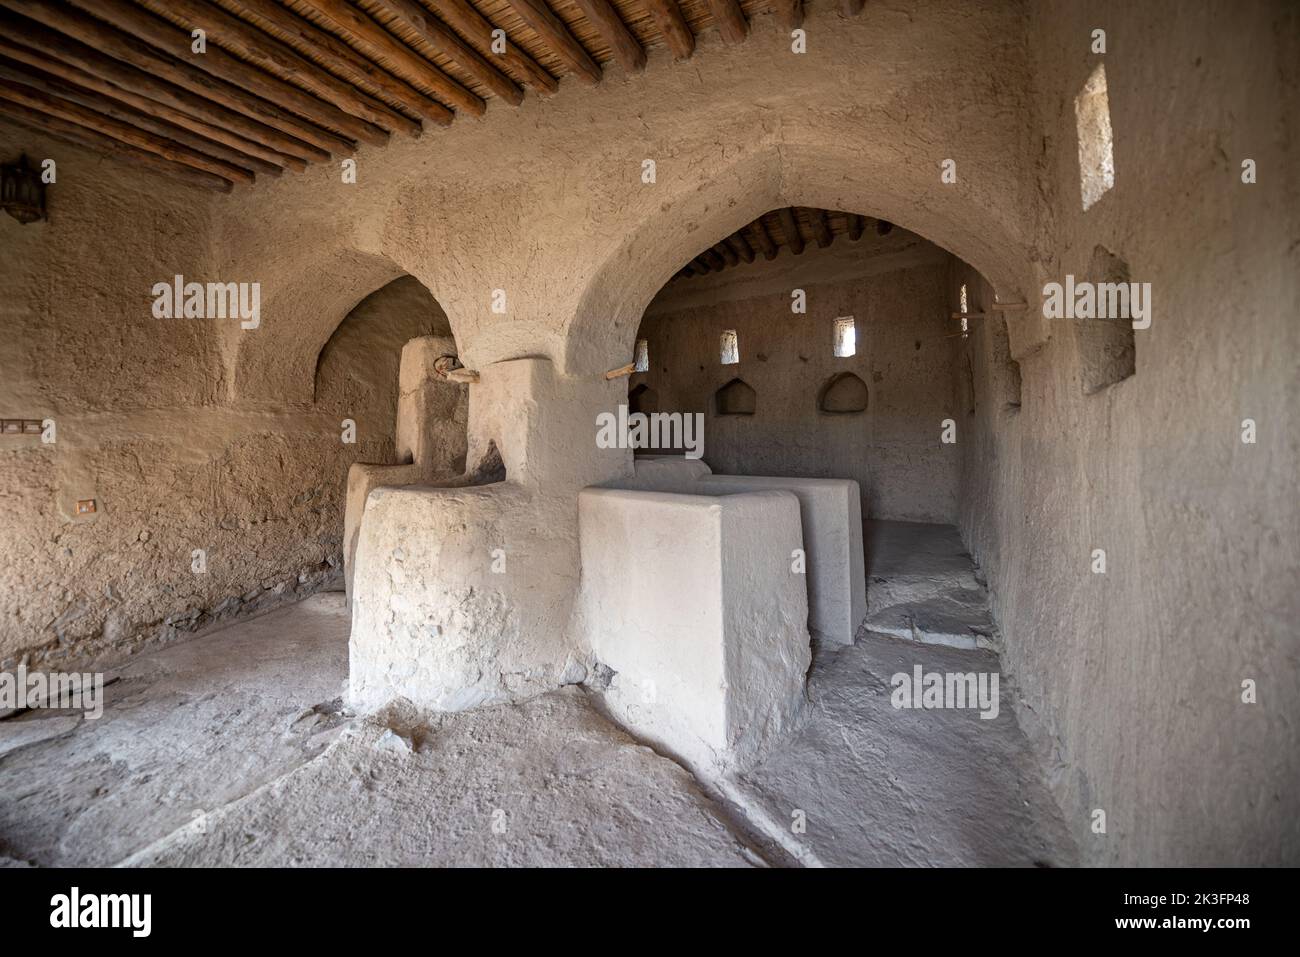 Interiors of Bahla Fort Citadel, Oman Stock Photo